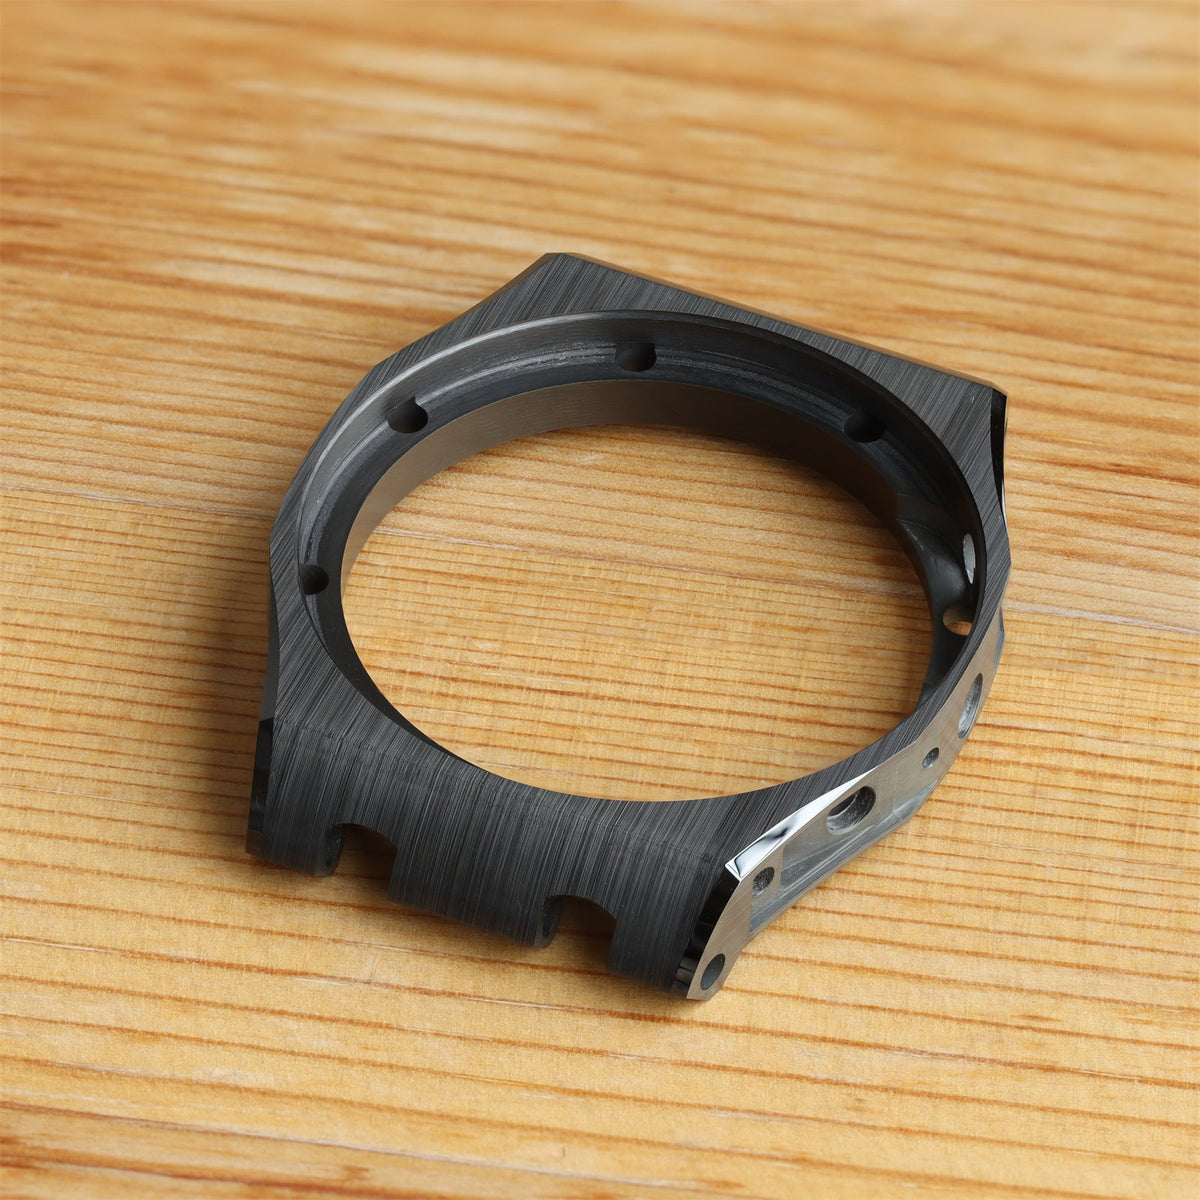 Brushed Ceramic Black Watch Bezel Case for Audemars Piguet 26405 44mm Royal Oak Offshore Chronograph Watch